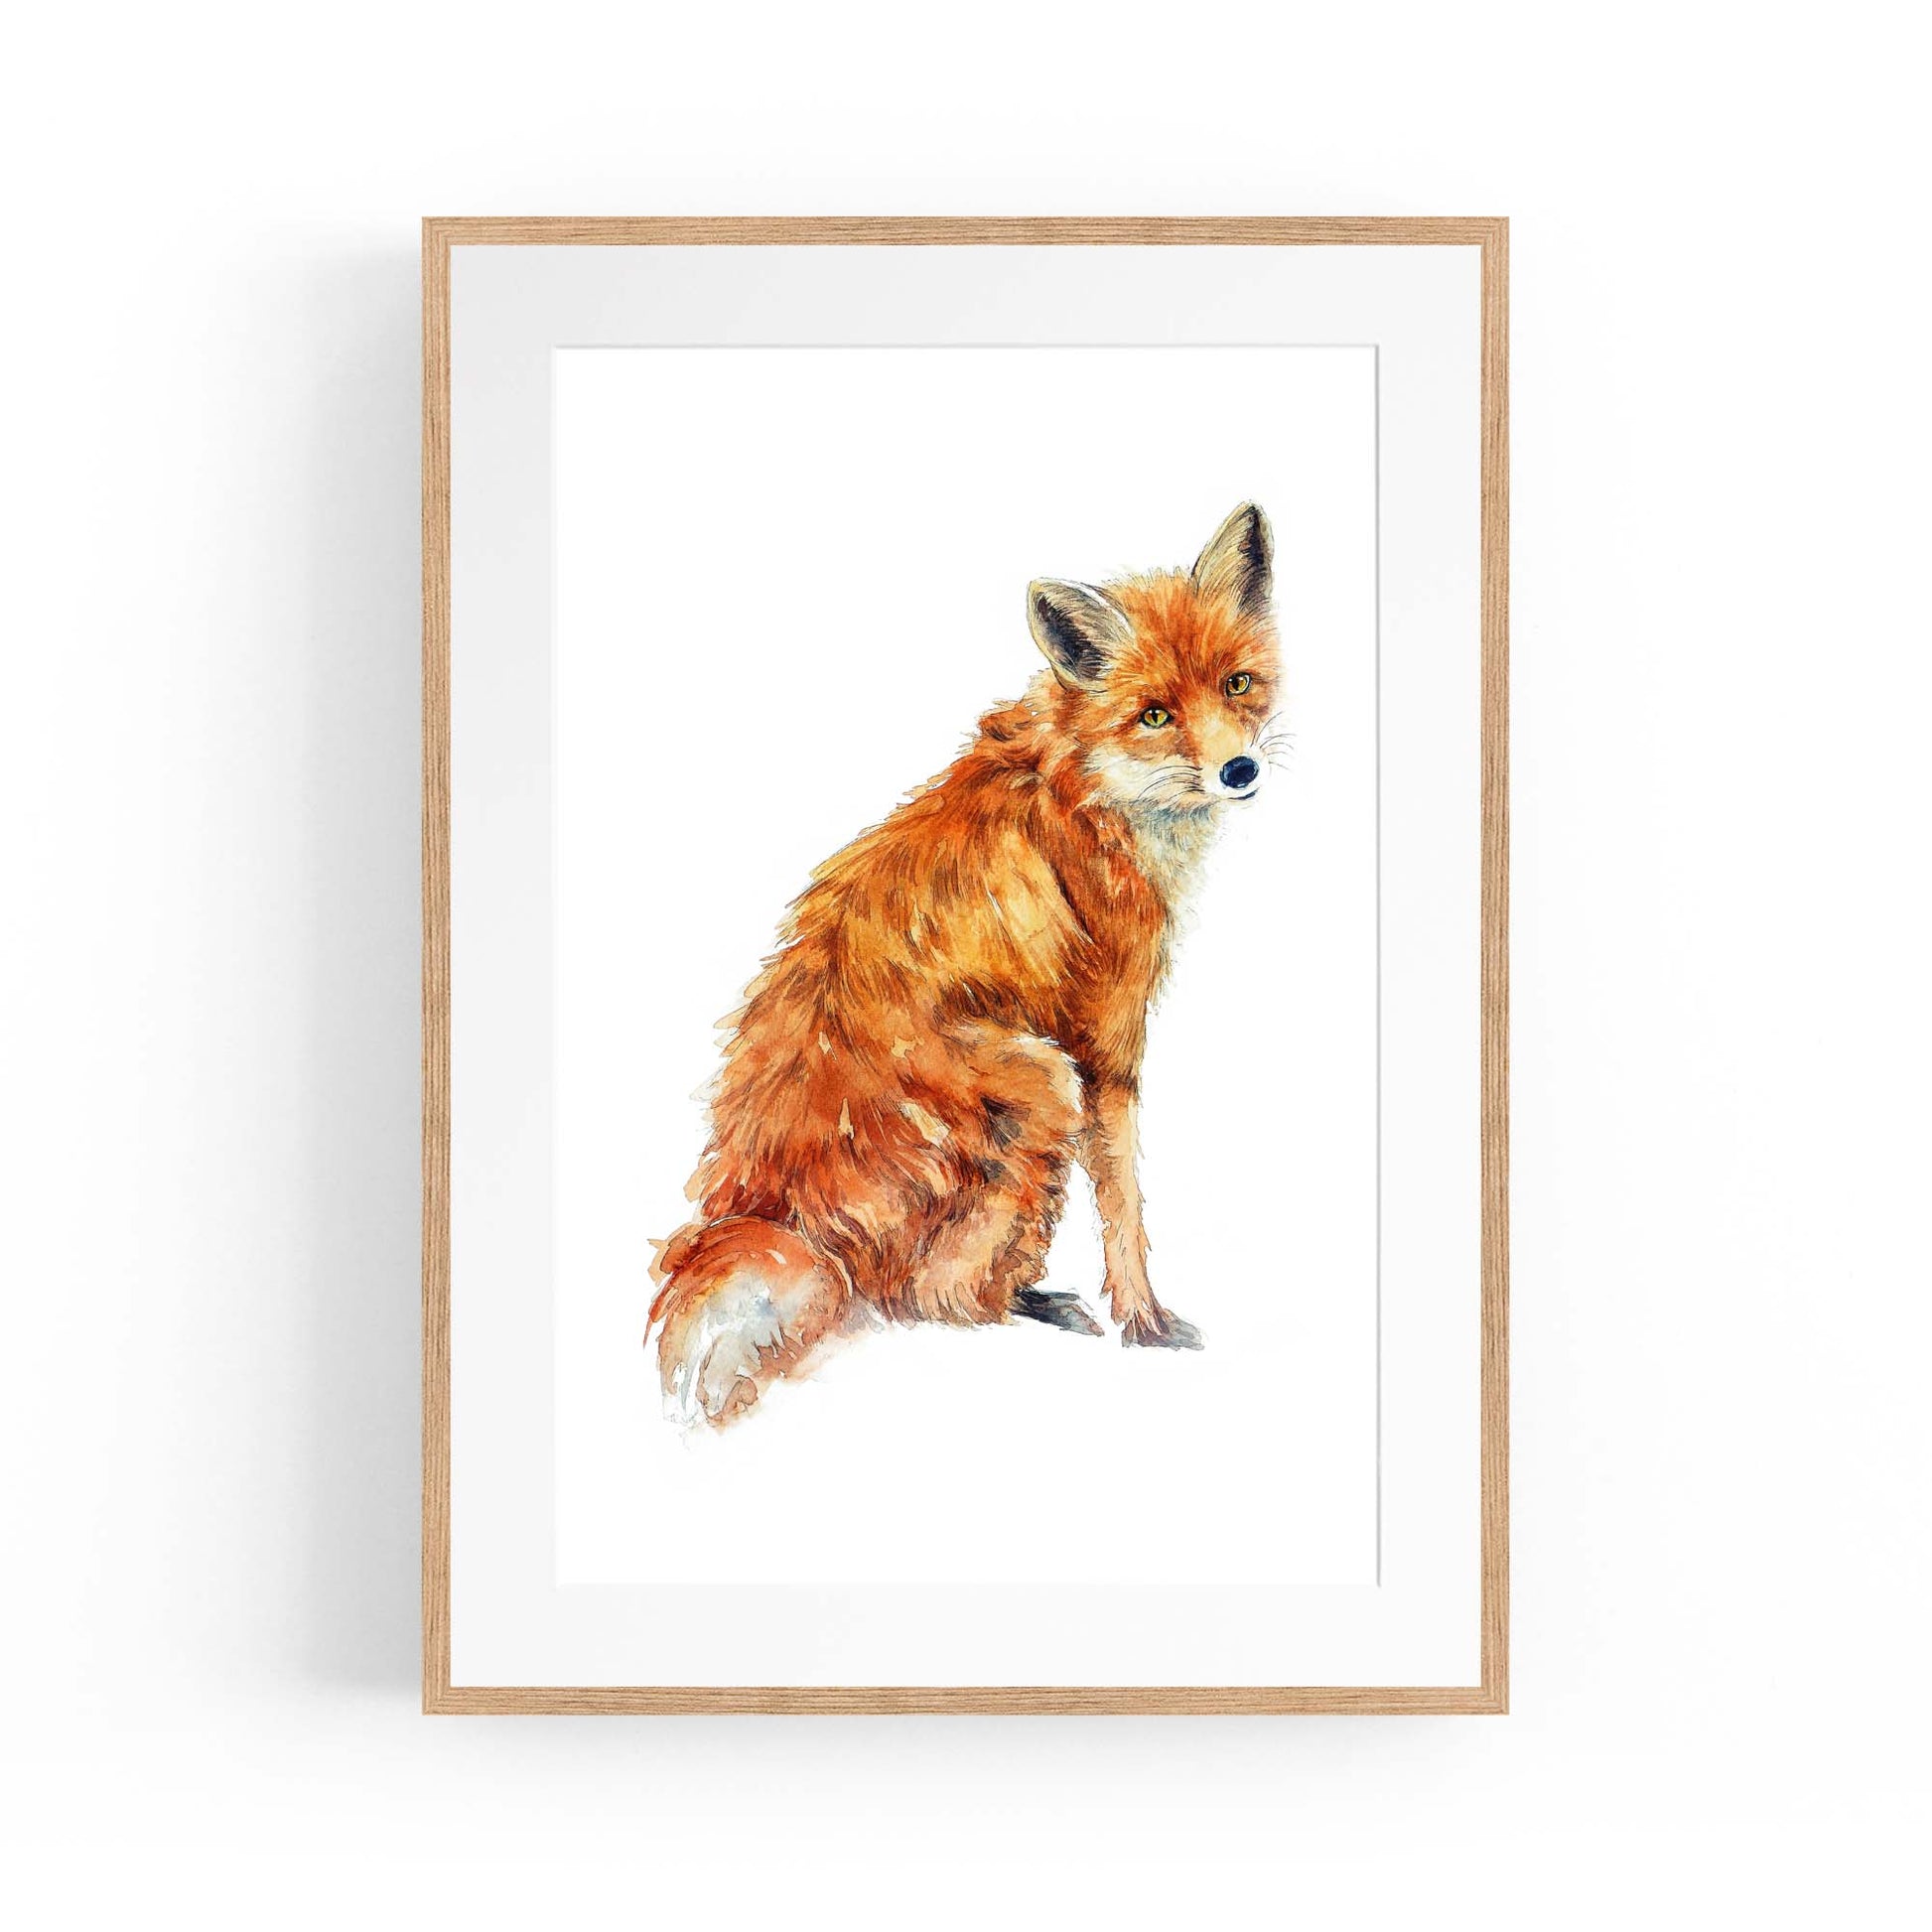 Watercolour Fox Painting Animal Nursery Wall Art - The Affordable Art Company